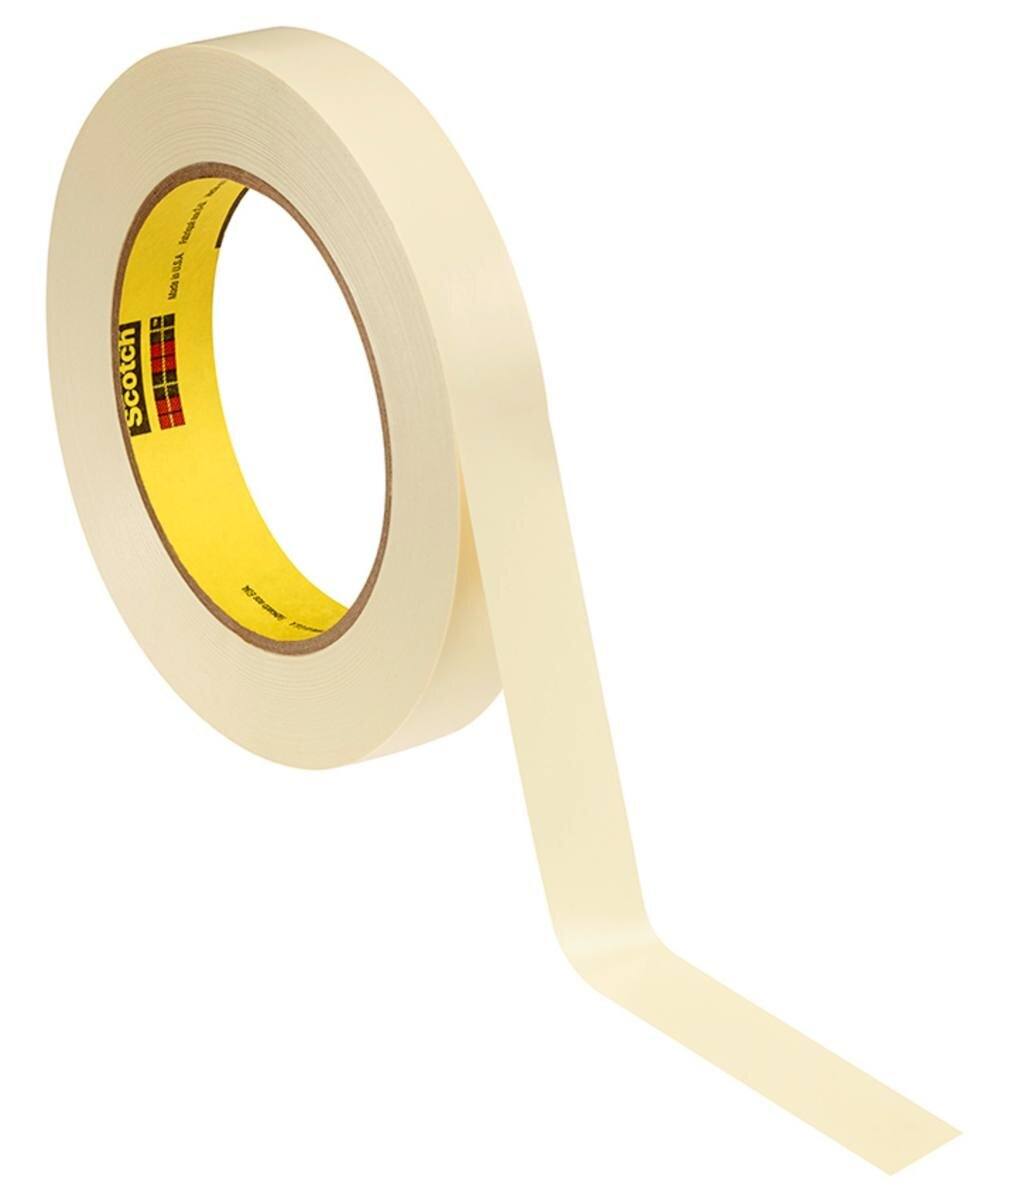 3M Electroplating tape soft PVC 470, yellow, 38 mm x 33 m, 0.18 mm